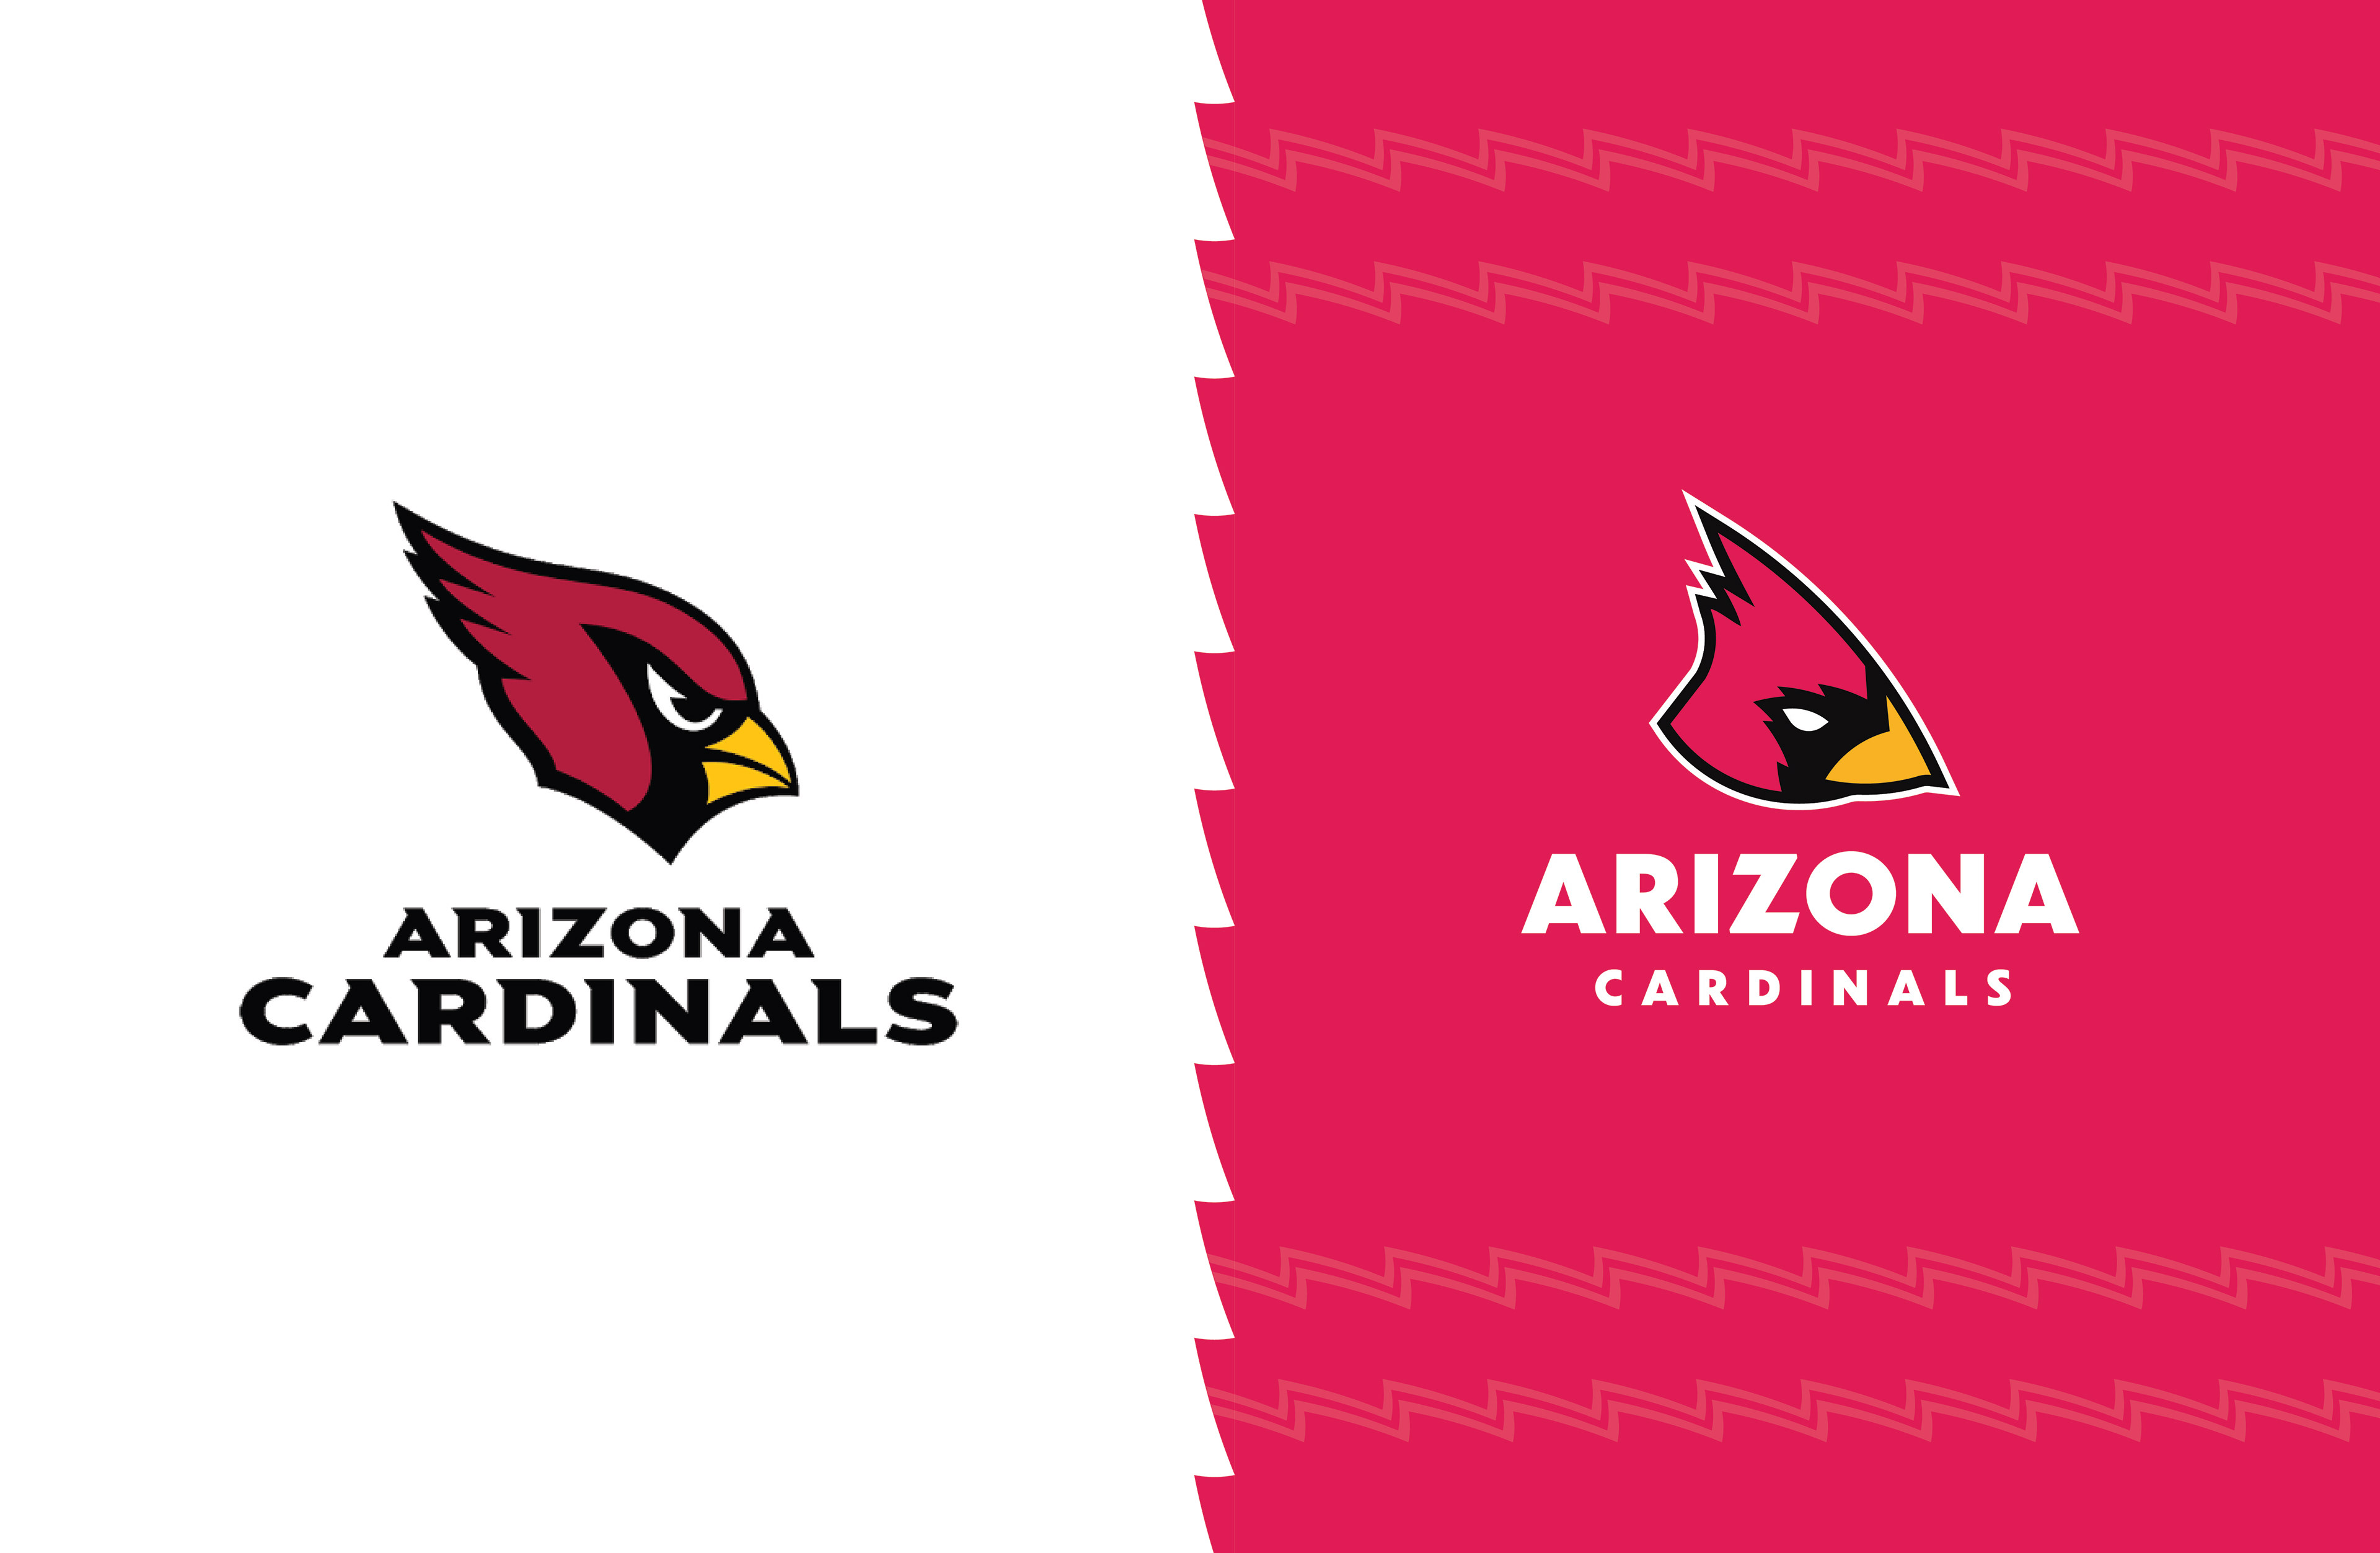 UNOFFICiAL ATHLETIC  Arizona Cardinals Rebrand